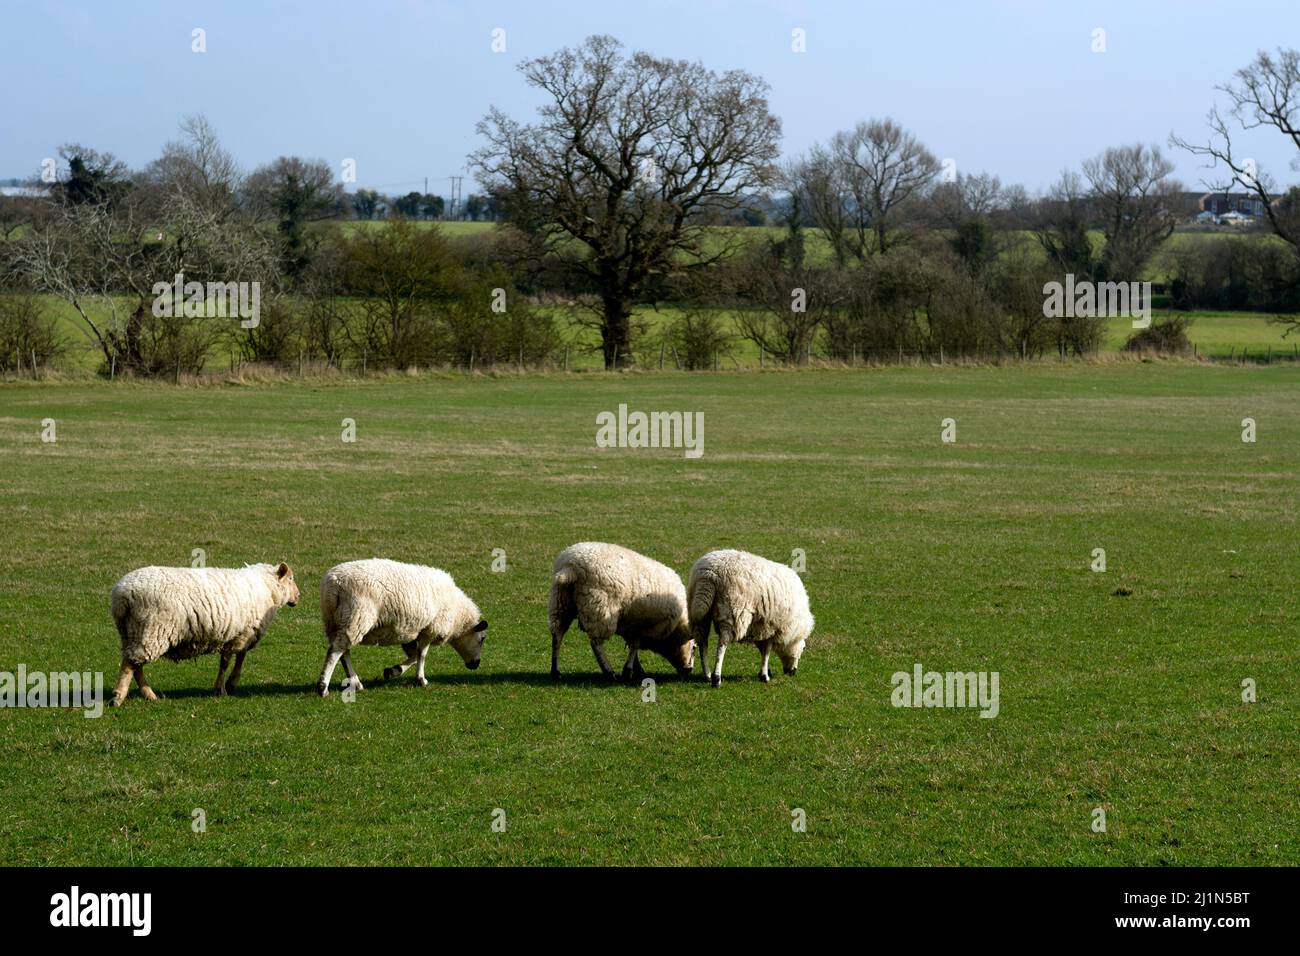 Four sheep in a field, Warwickshire, England, UK Stock Photo